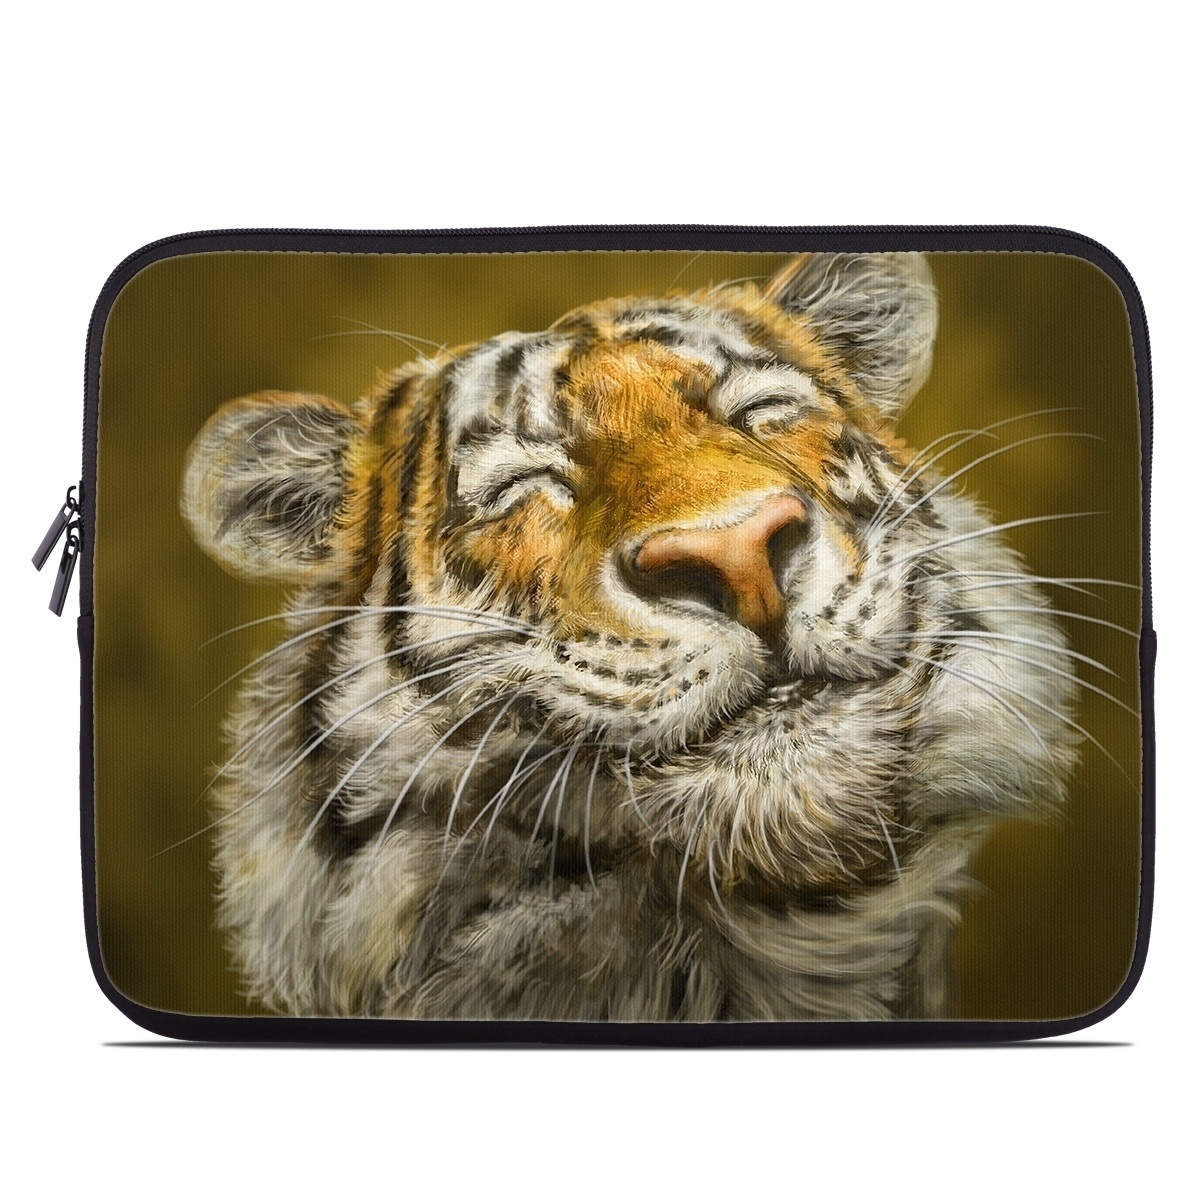 Laptop Sleeve - Smiling Tiger (Image 1)